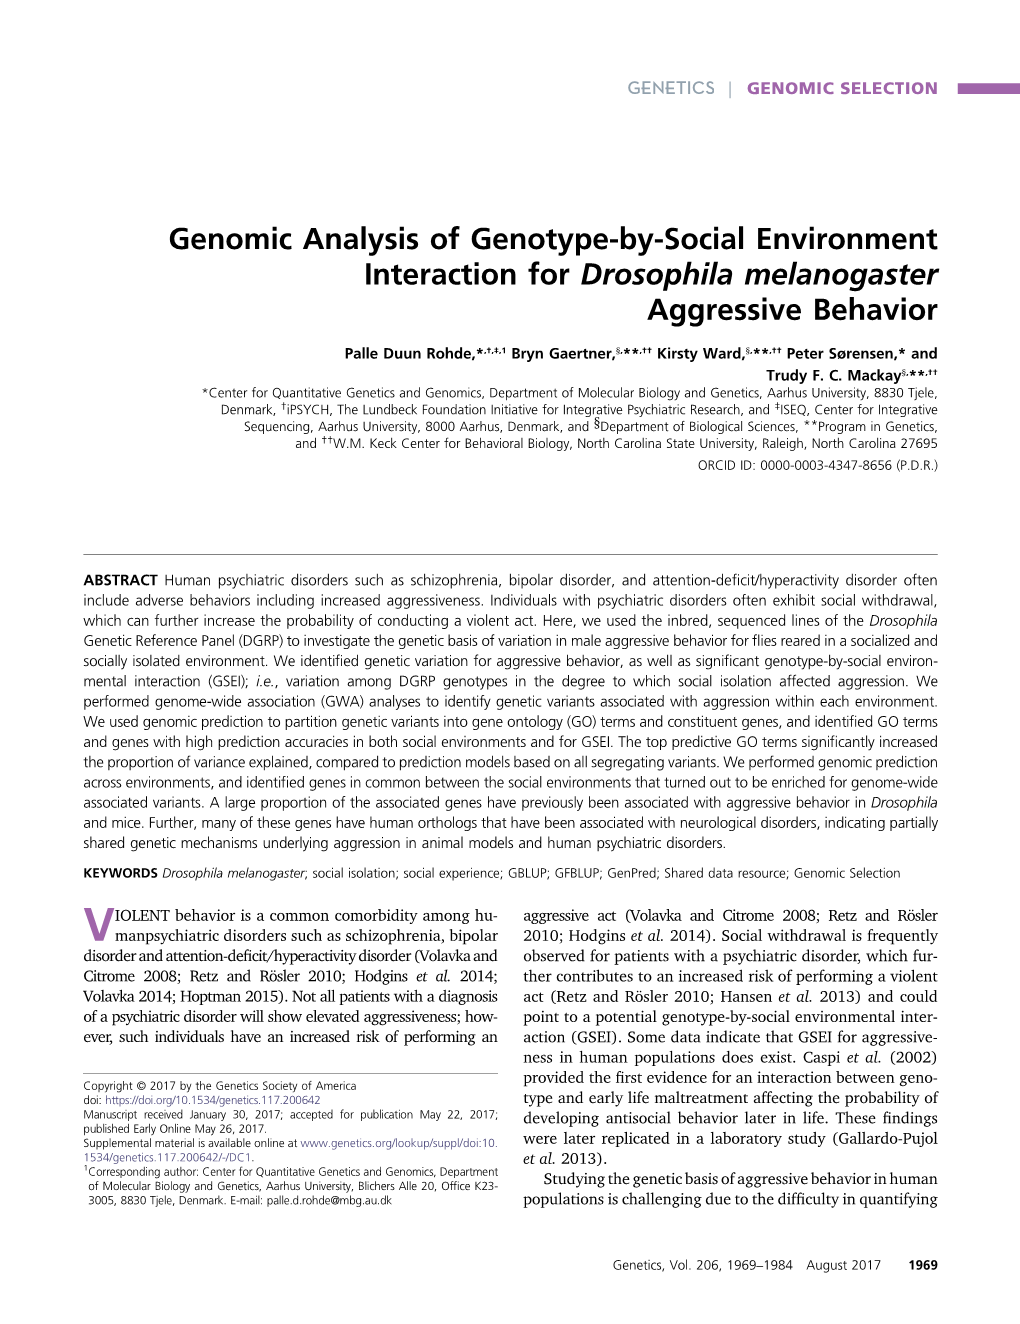 Genomic Analysis of Genotype-By-Social Environment Interaction for Drosophila Melanogaster Aggressive Behavior